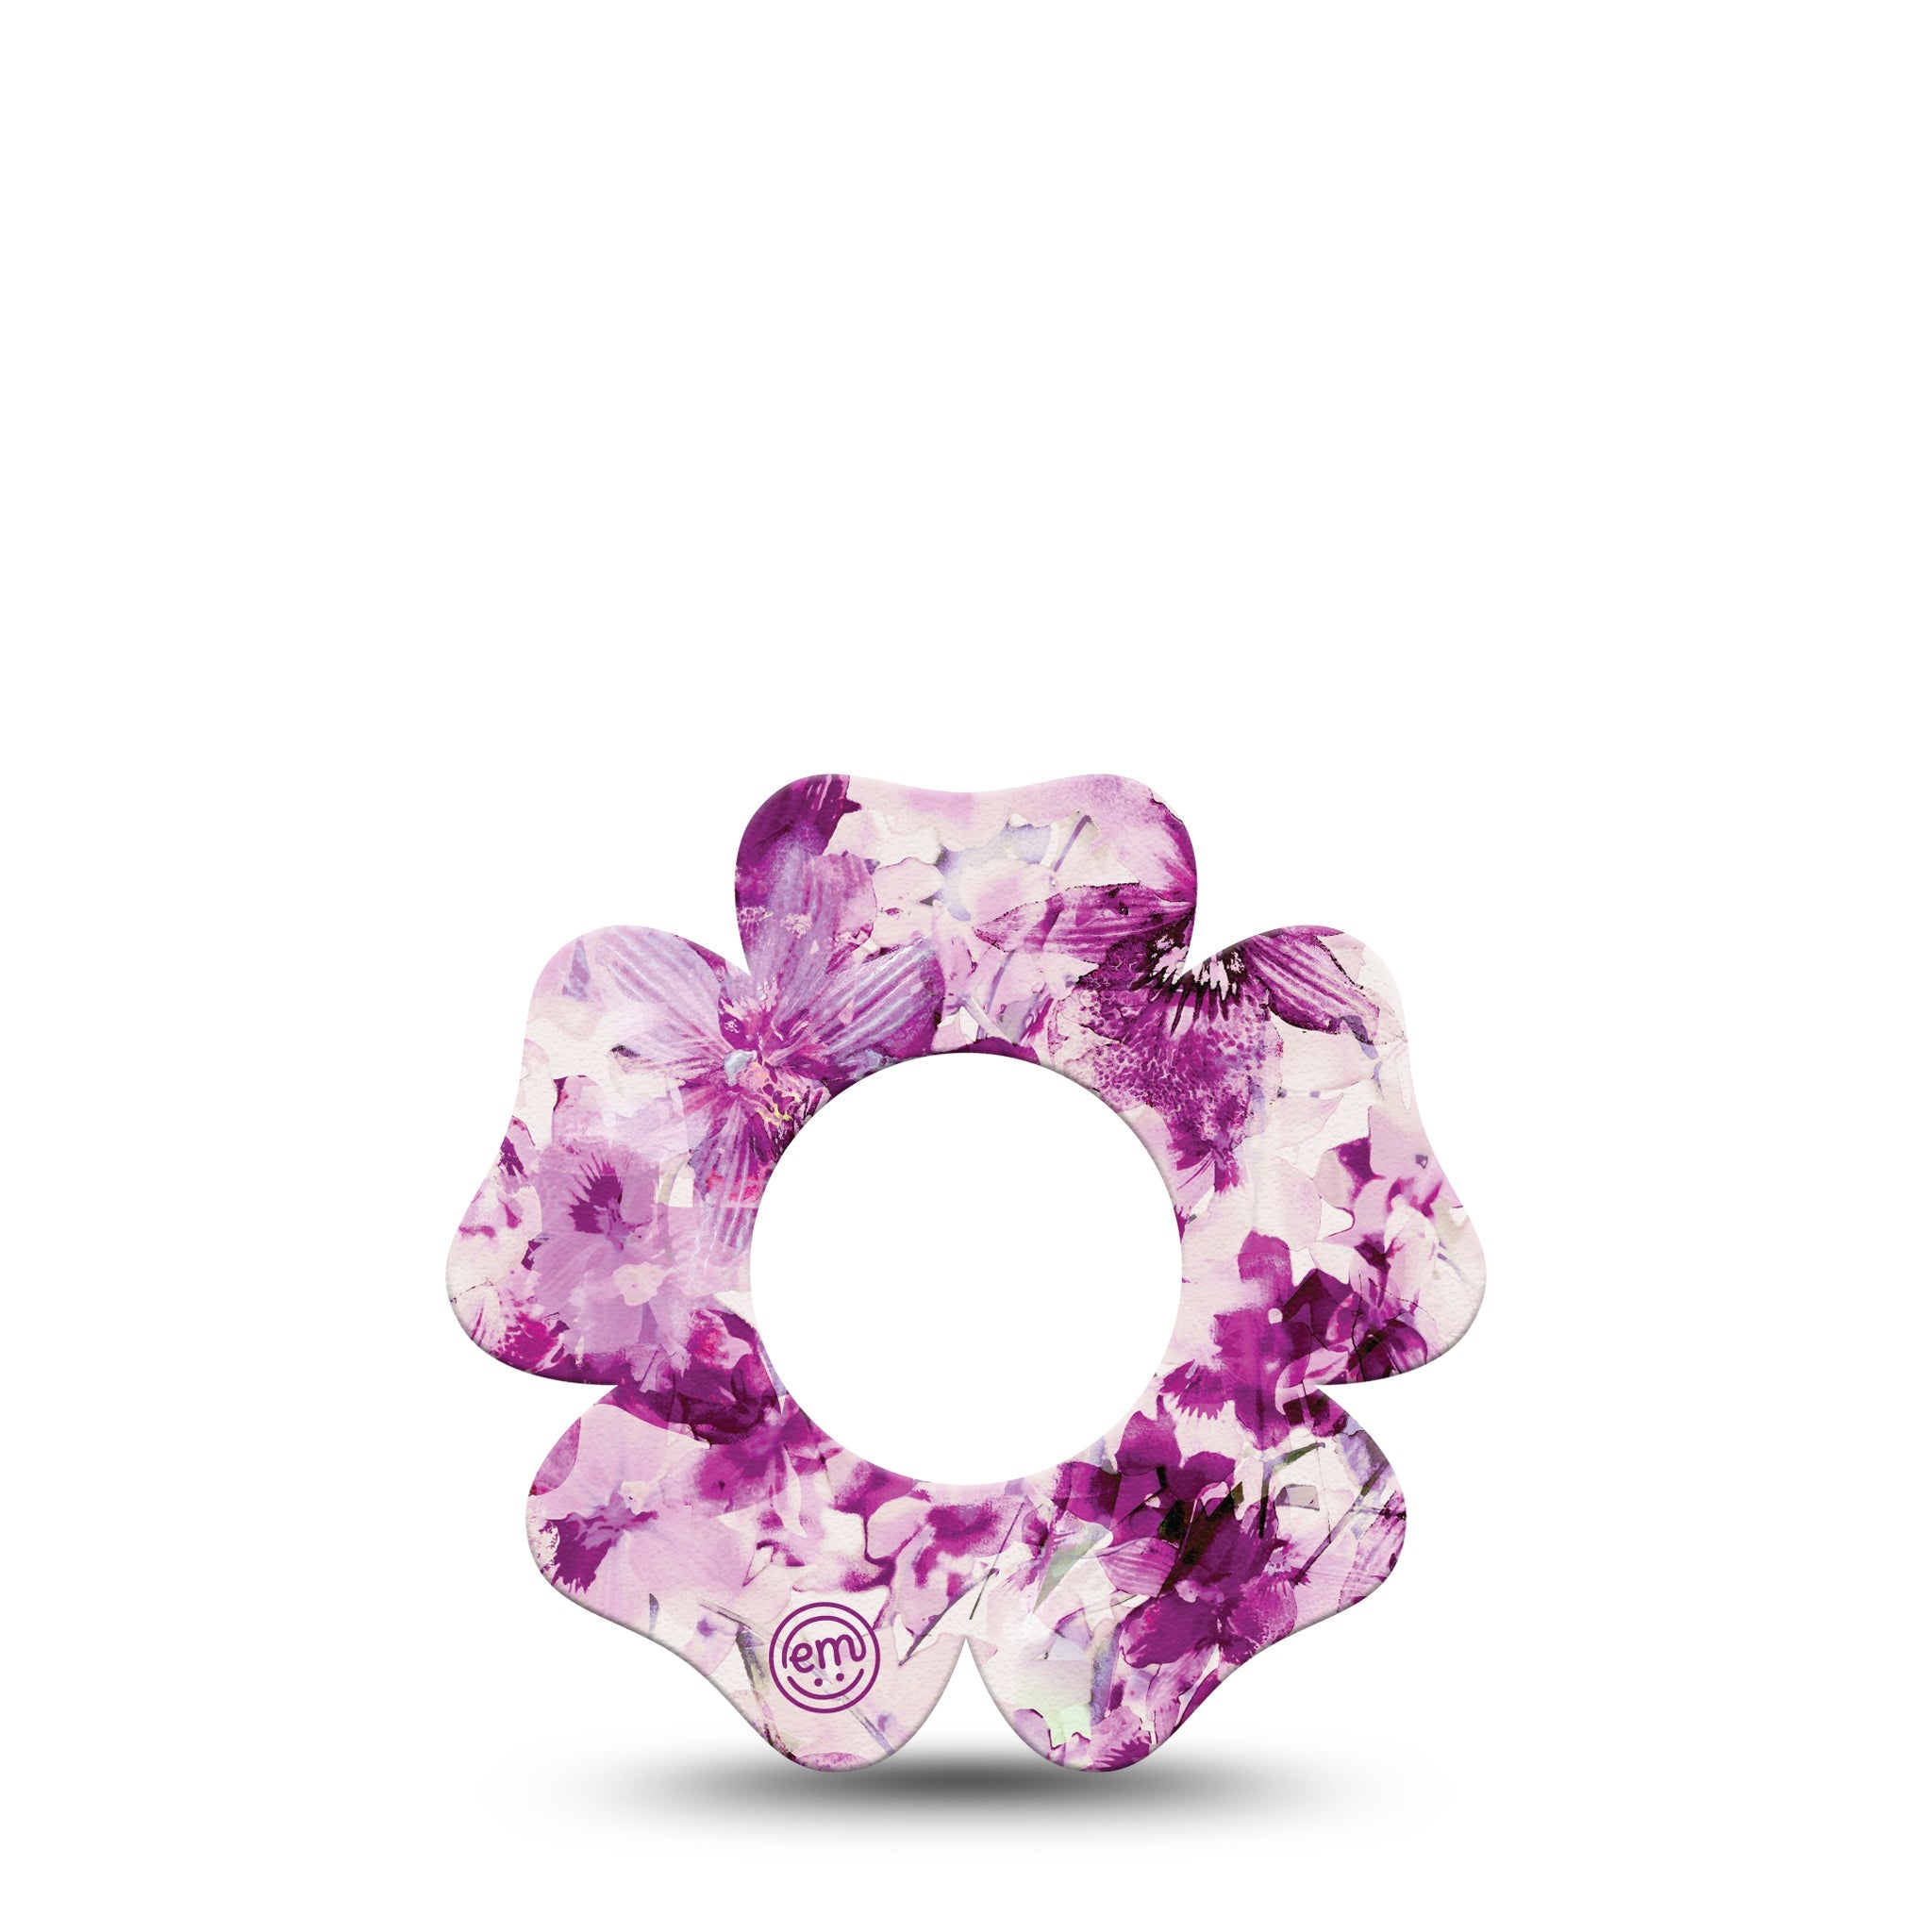 Violet Orchids Libre Flower Tape - ExpressionMed